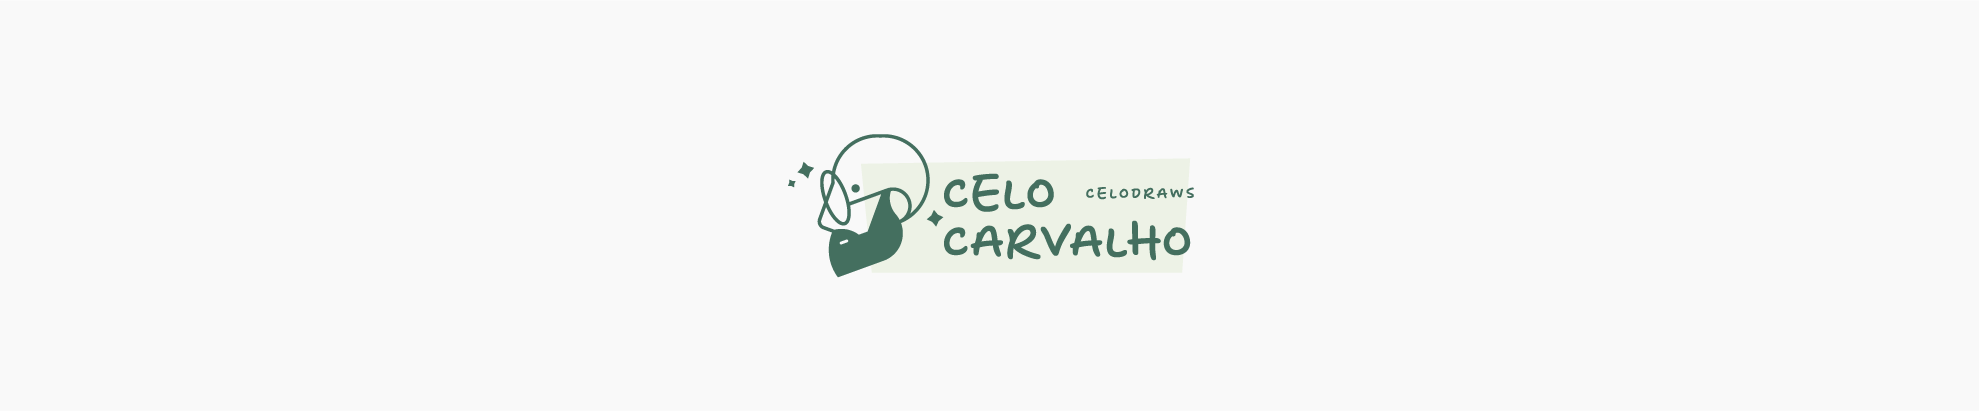 Profielbanner van Celo Carvalho